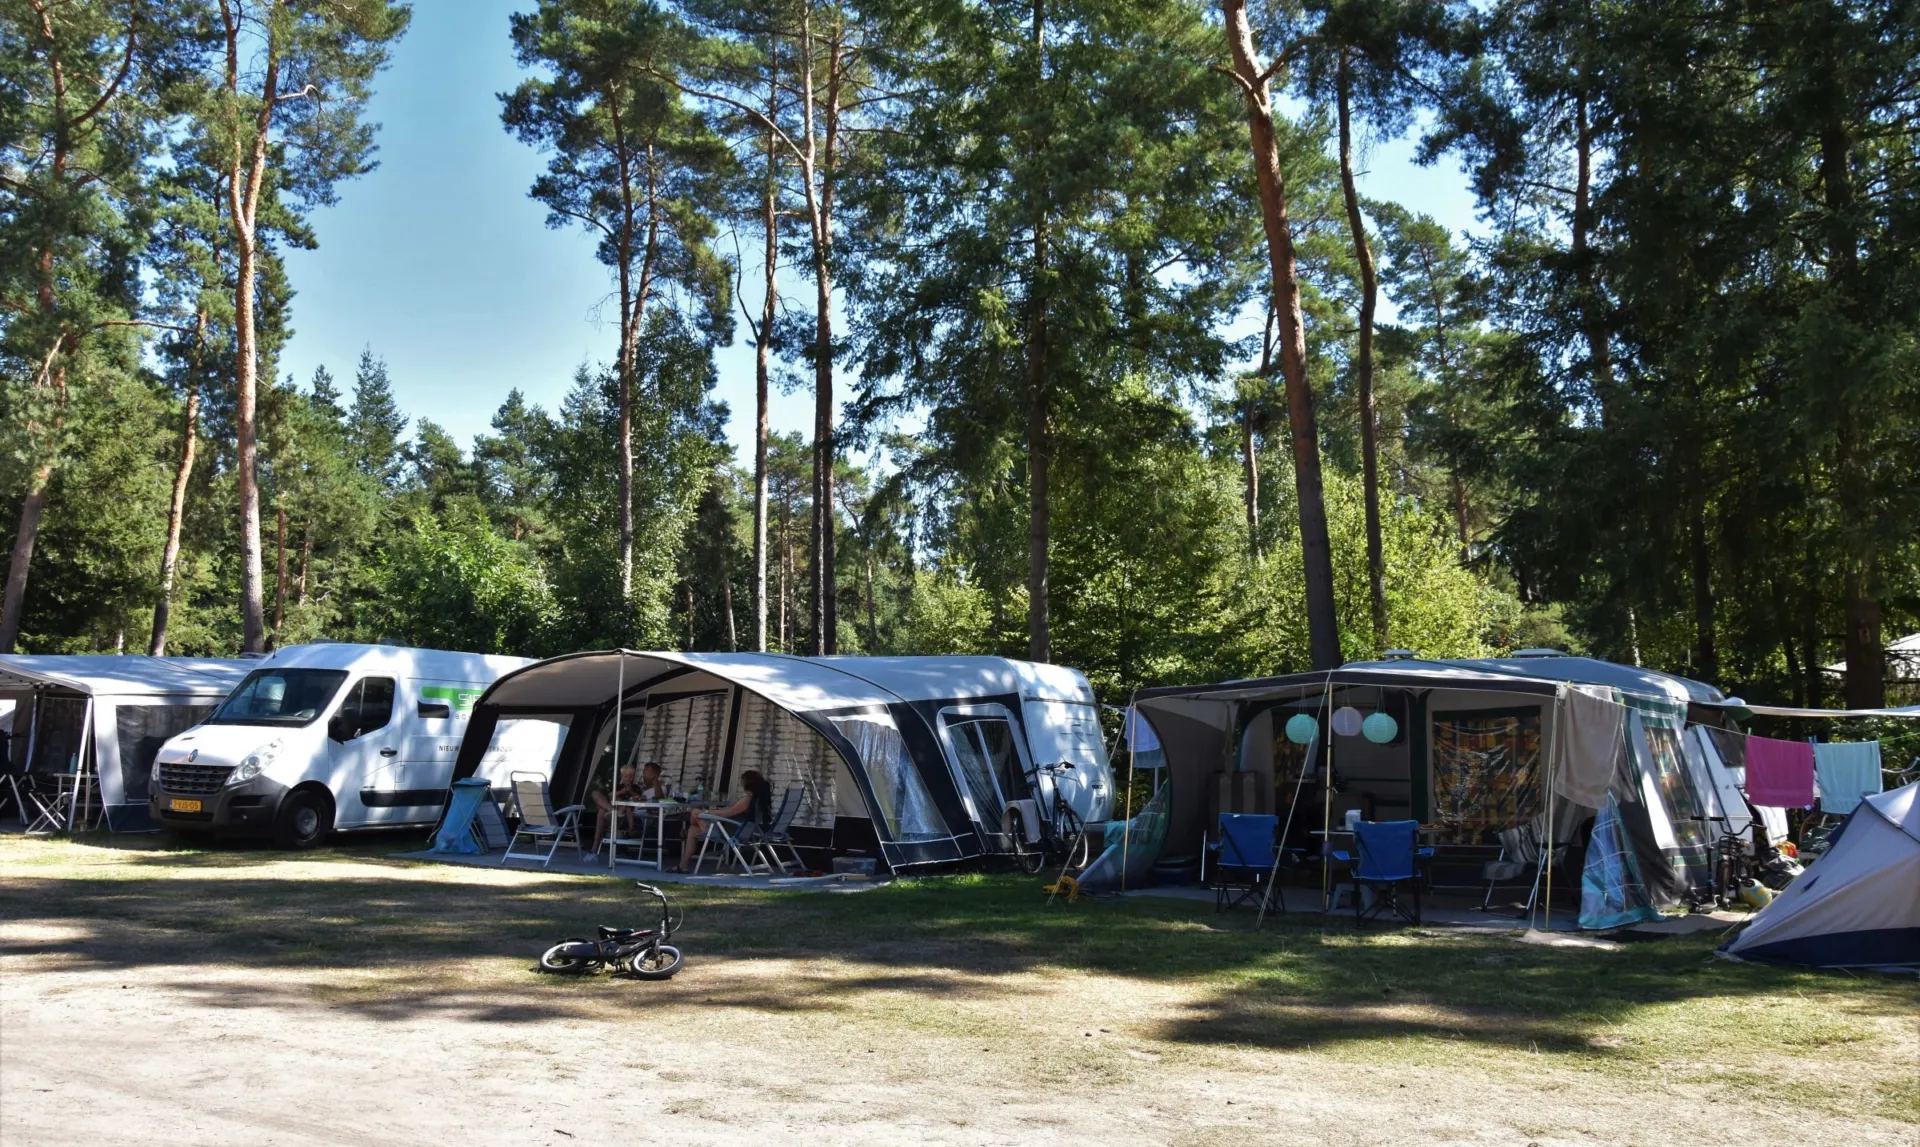 Camping Ommen comfort kampeerplaats Ommerhout 7